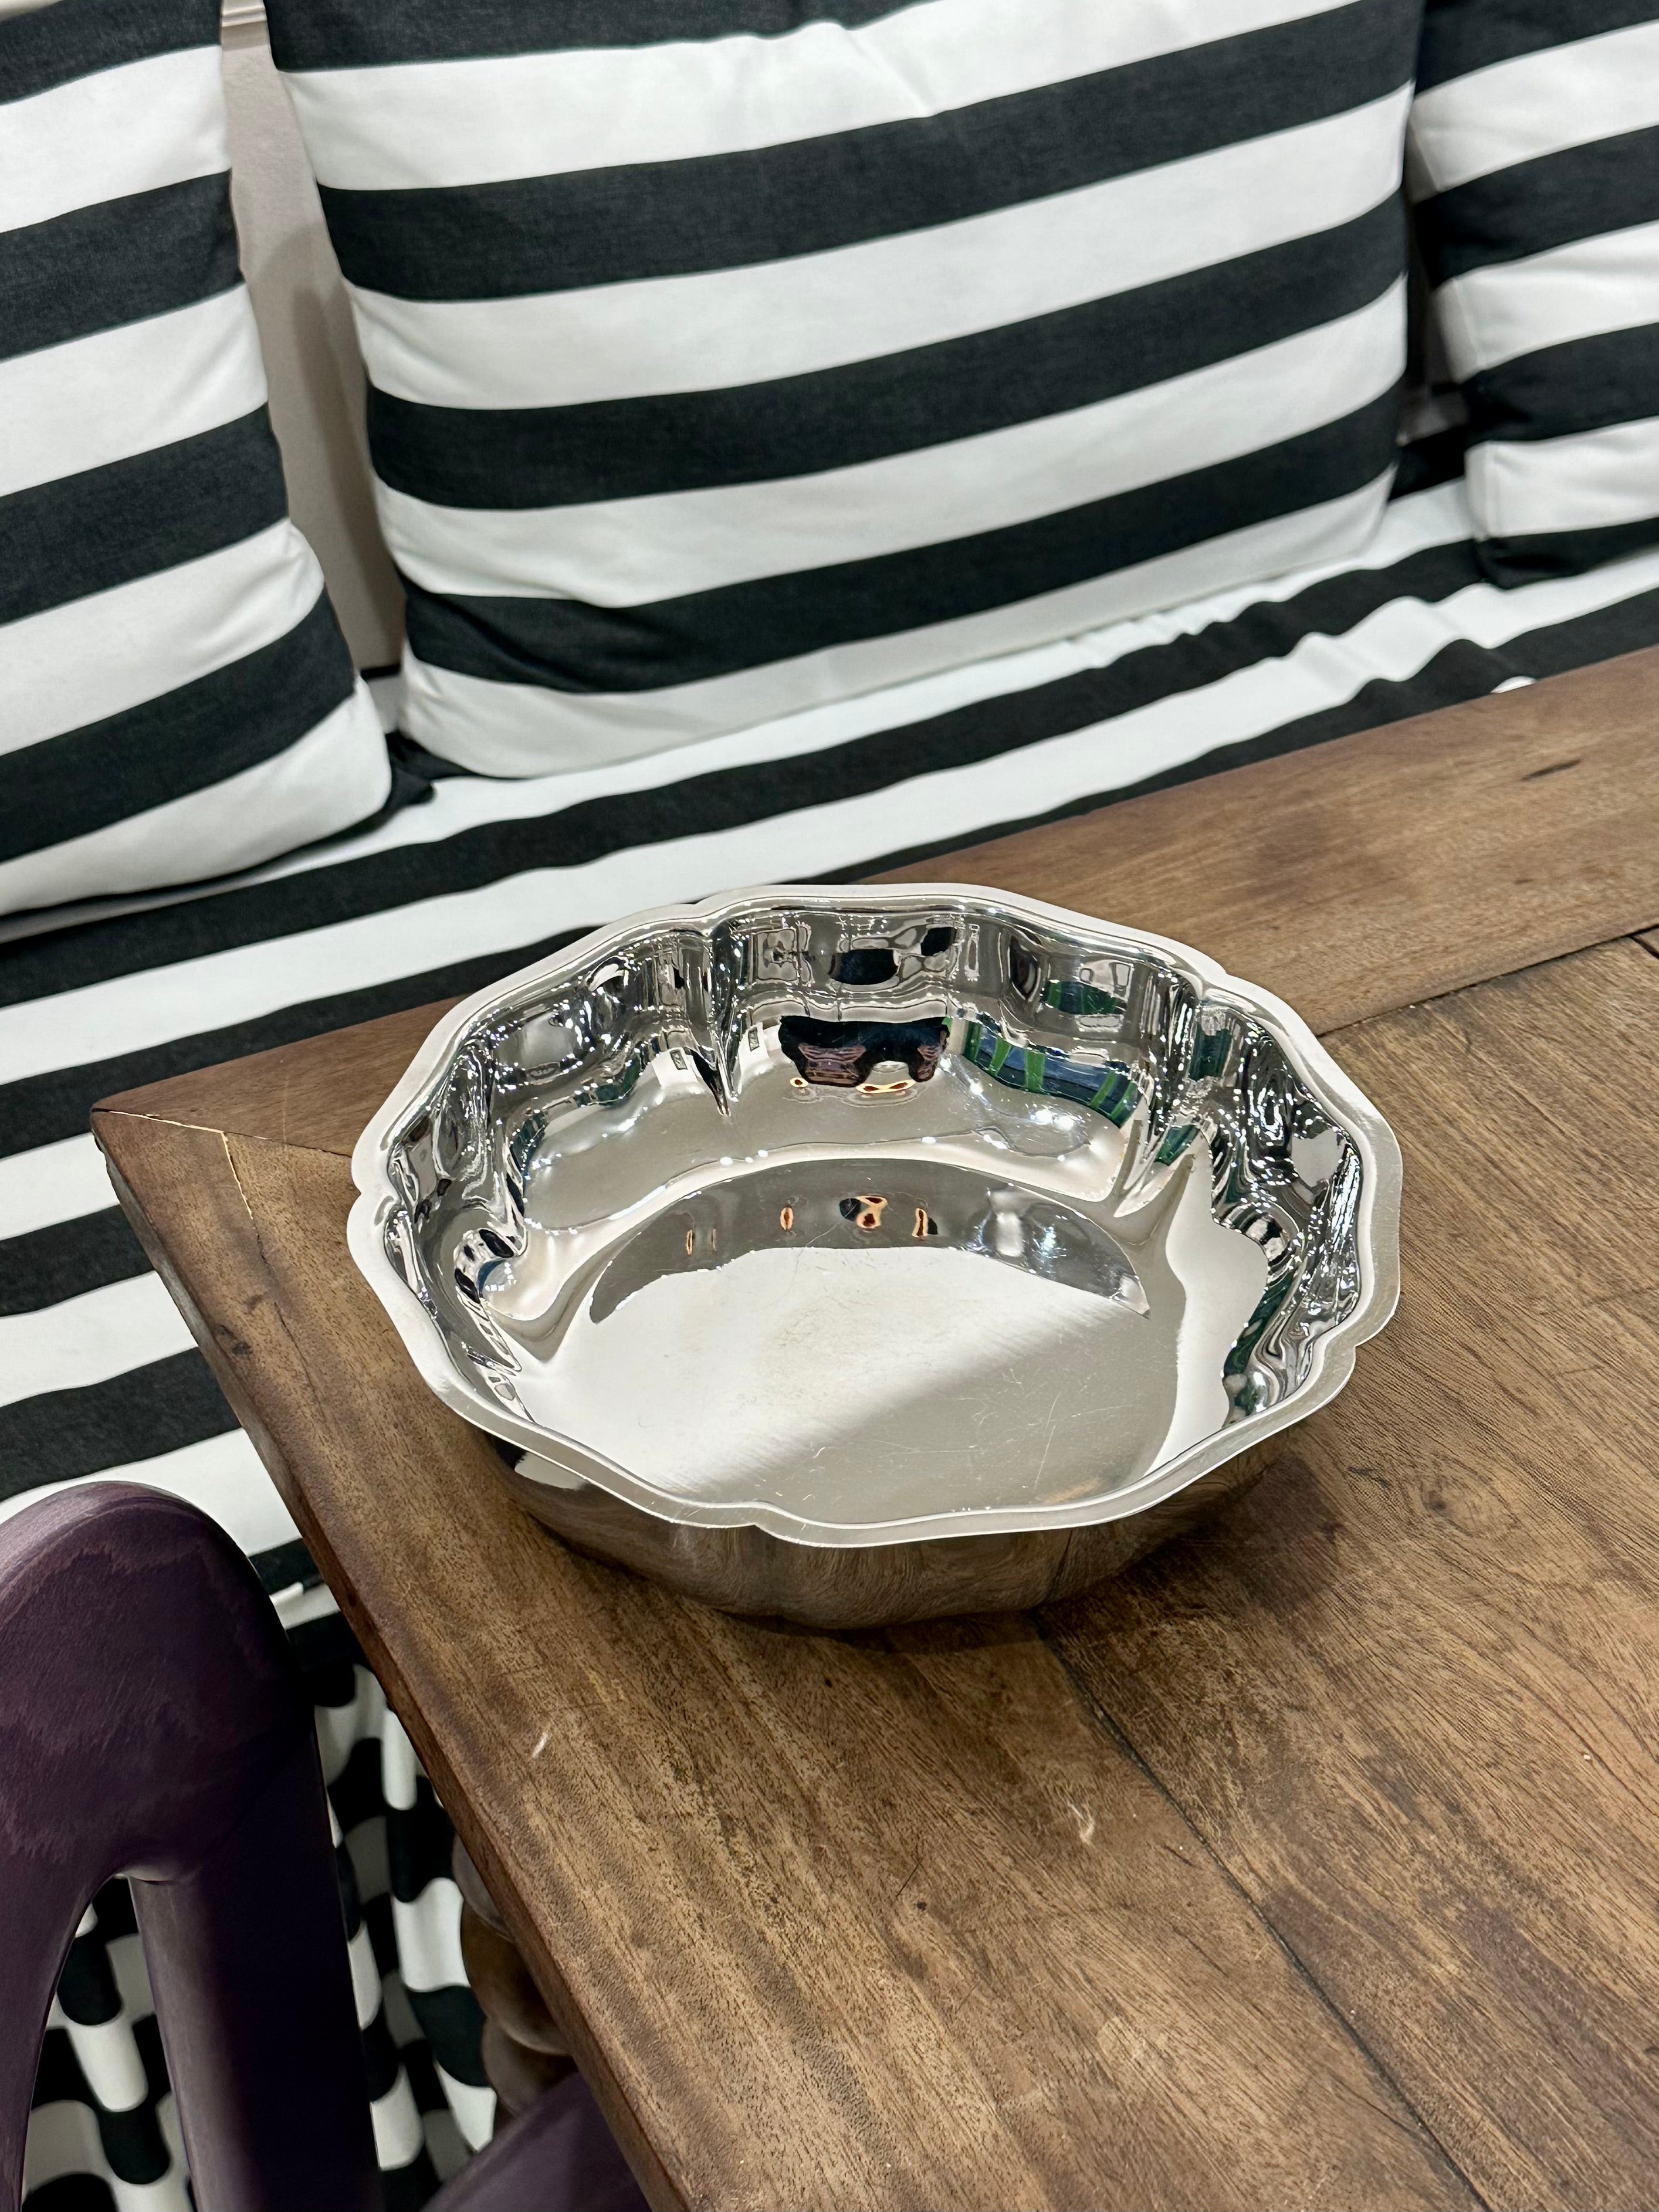 Silver round bowl